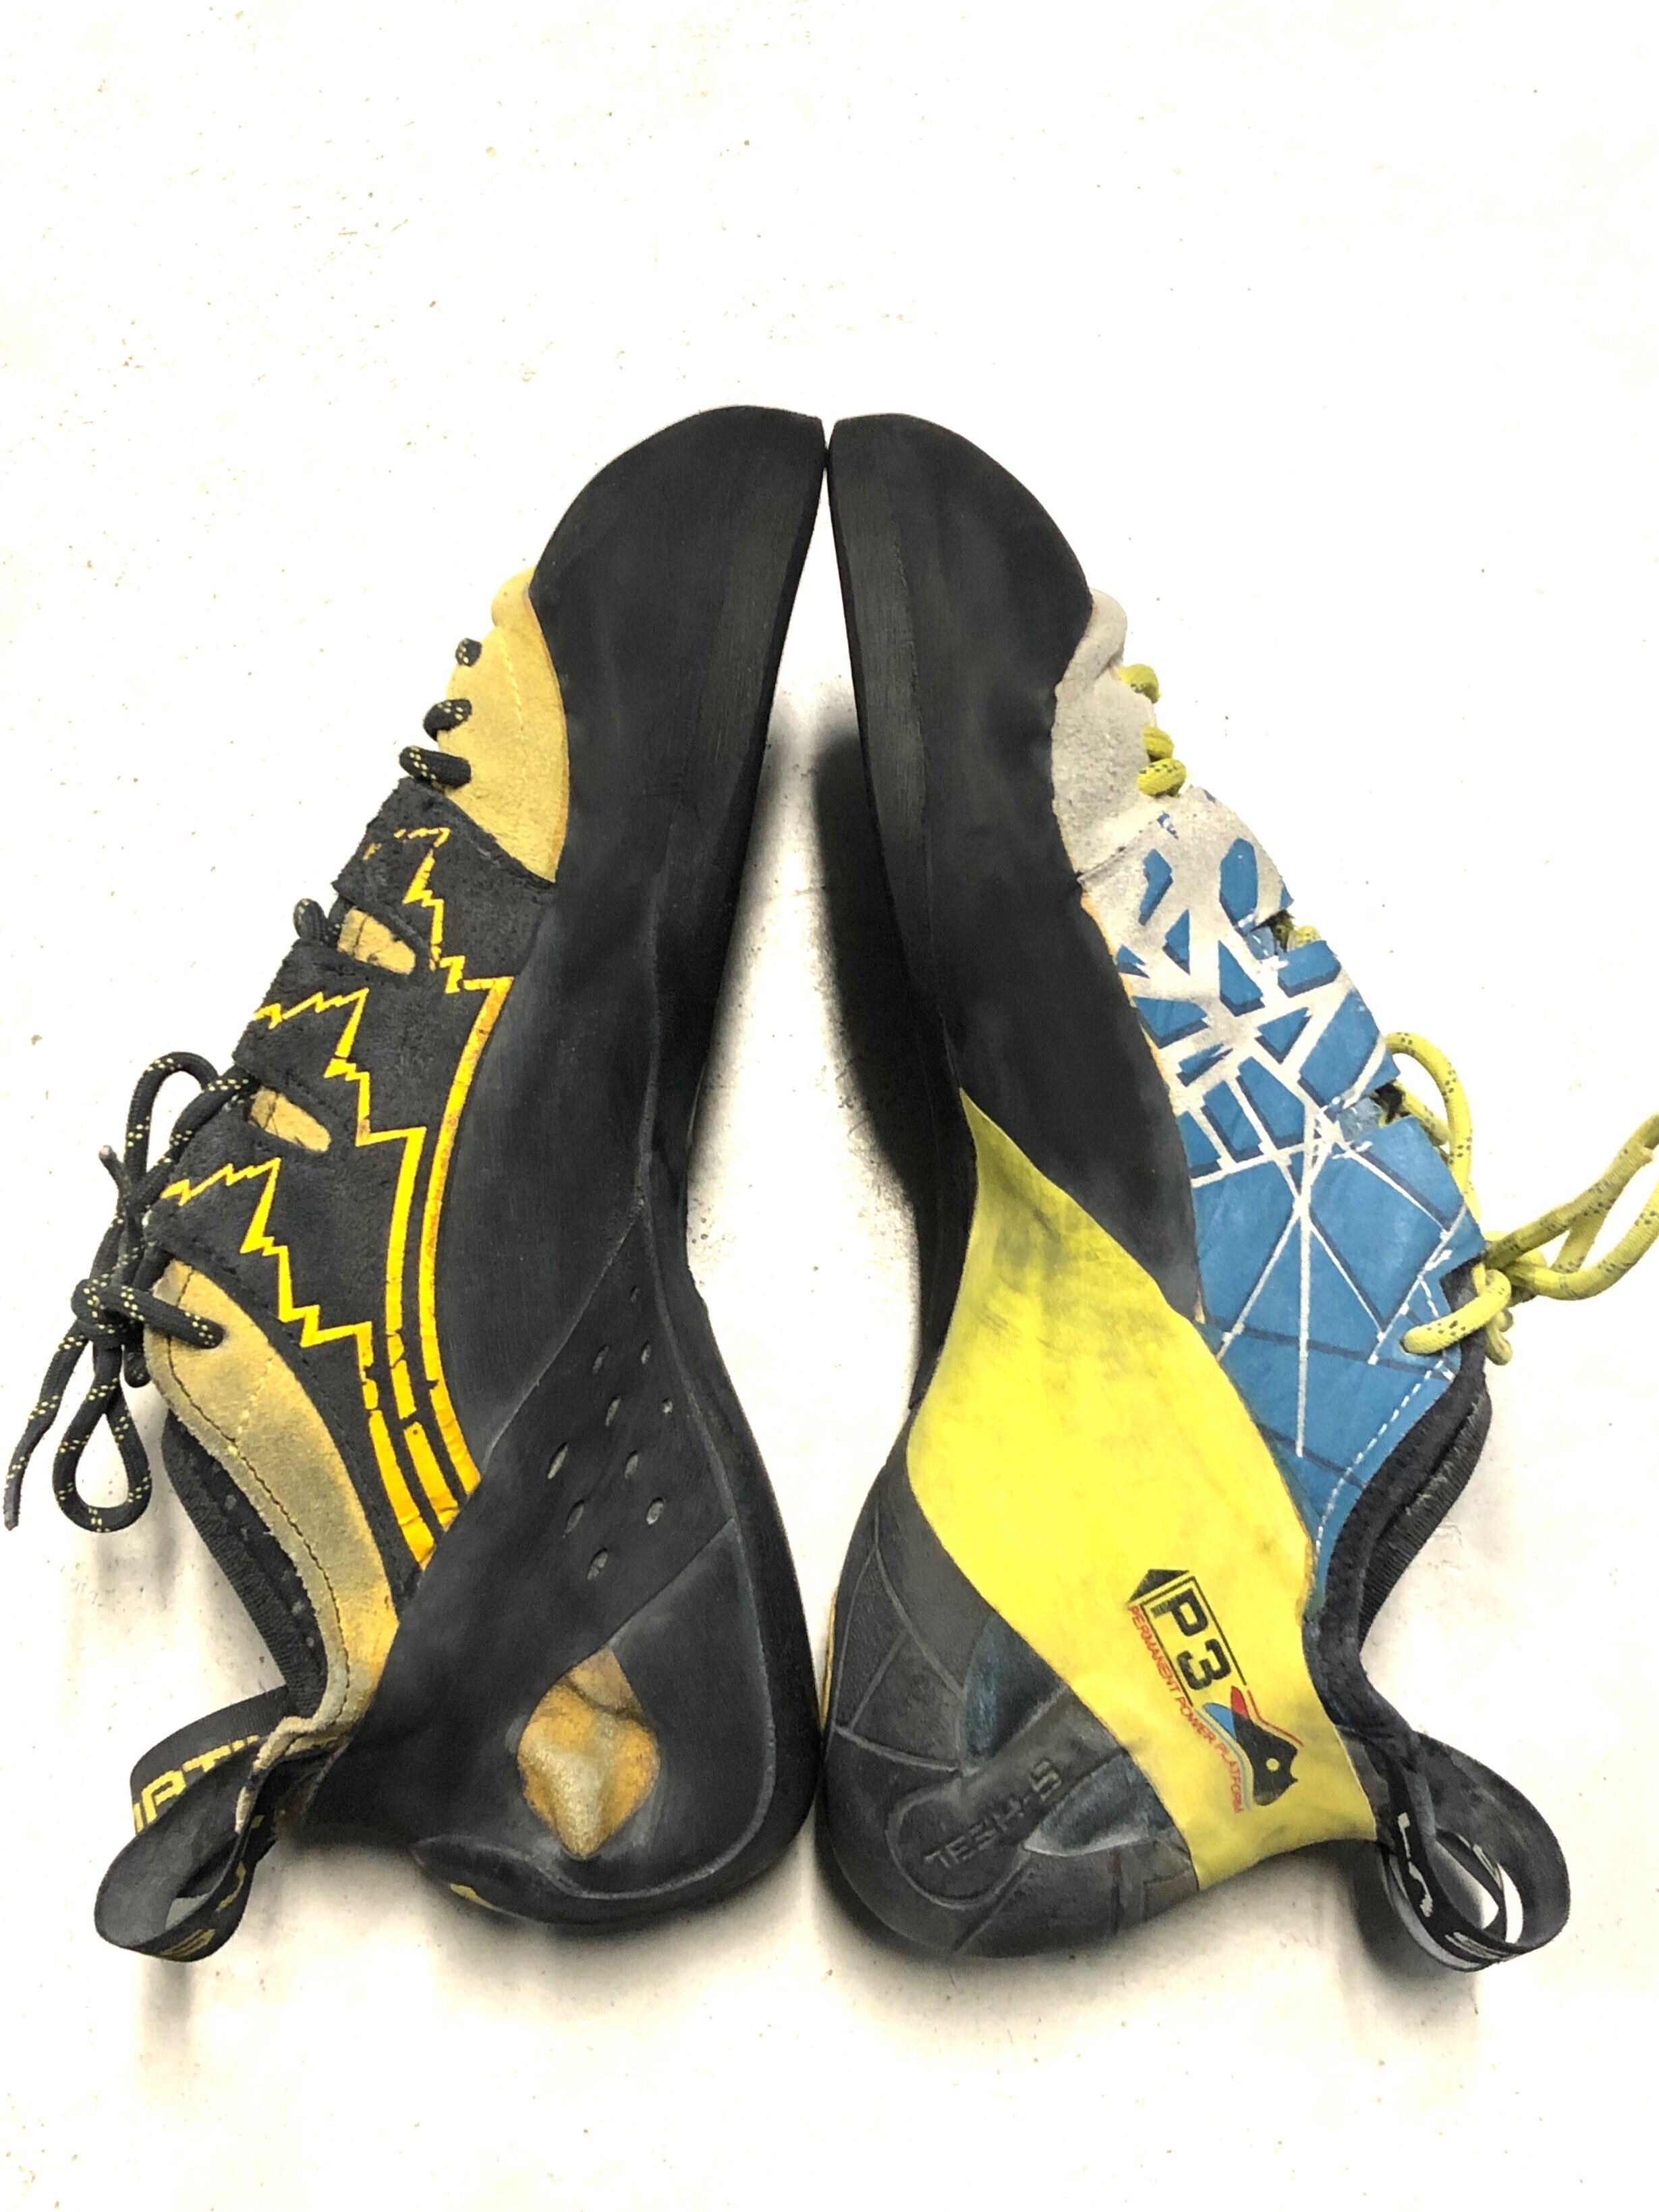 Resole Kit Vibram XS Grip 2 Climbing Shoe half sole 